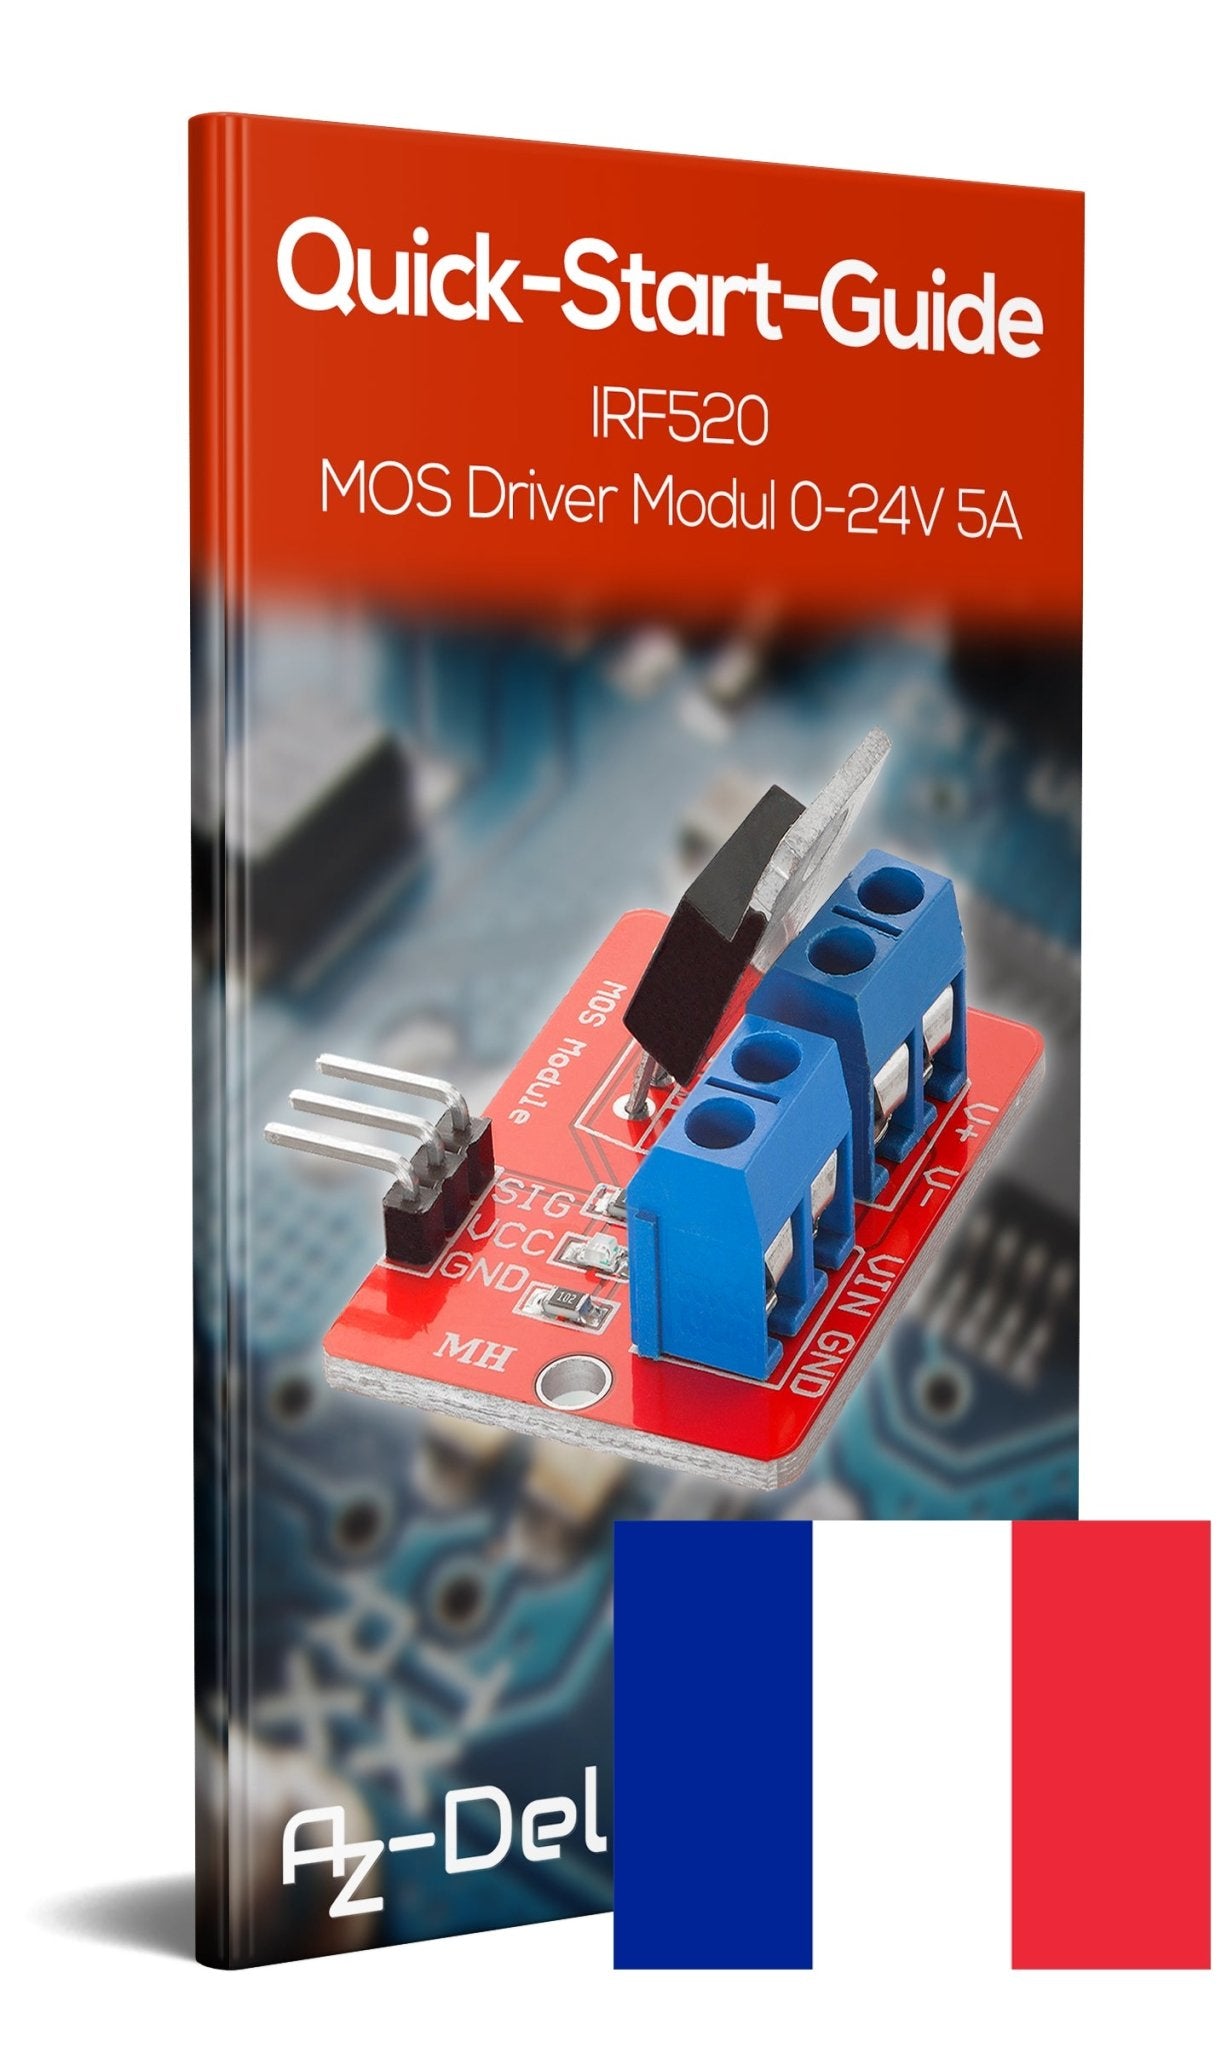 IRF520 MOS Driver Modul 0-24V 5A - AZ-Delivery